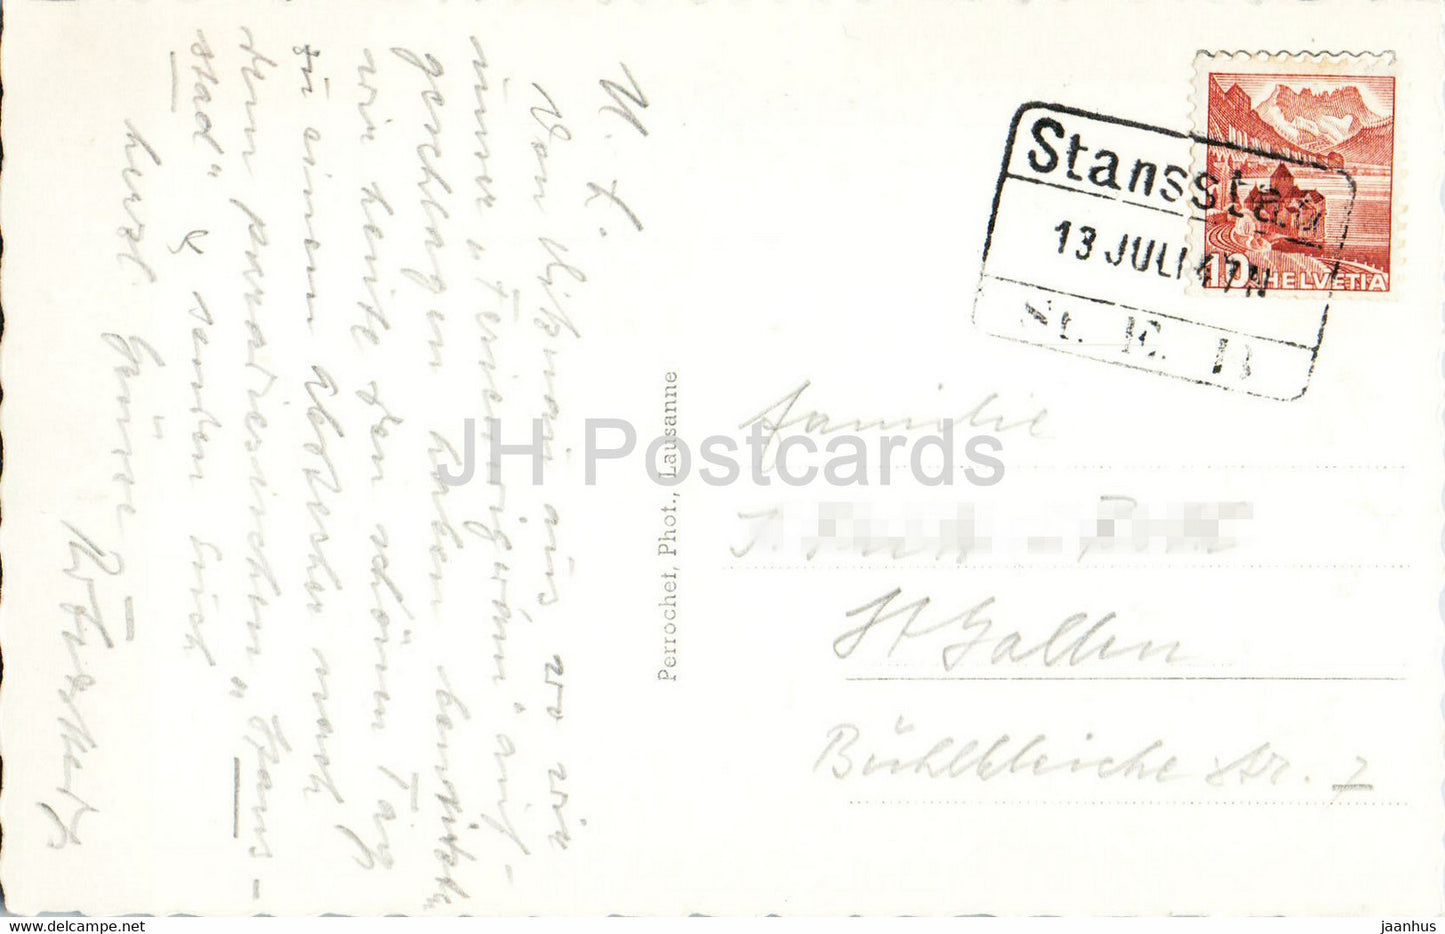 Stimmung mit Stanserhorn - Rugenstock u Pilatus - 8916 - 1947 - carte postale ancienne - Suisse - utilisé